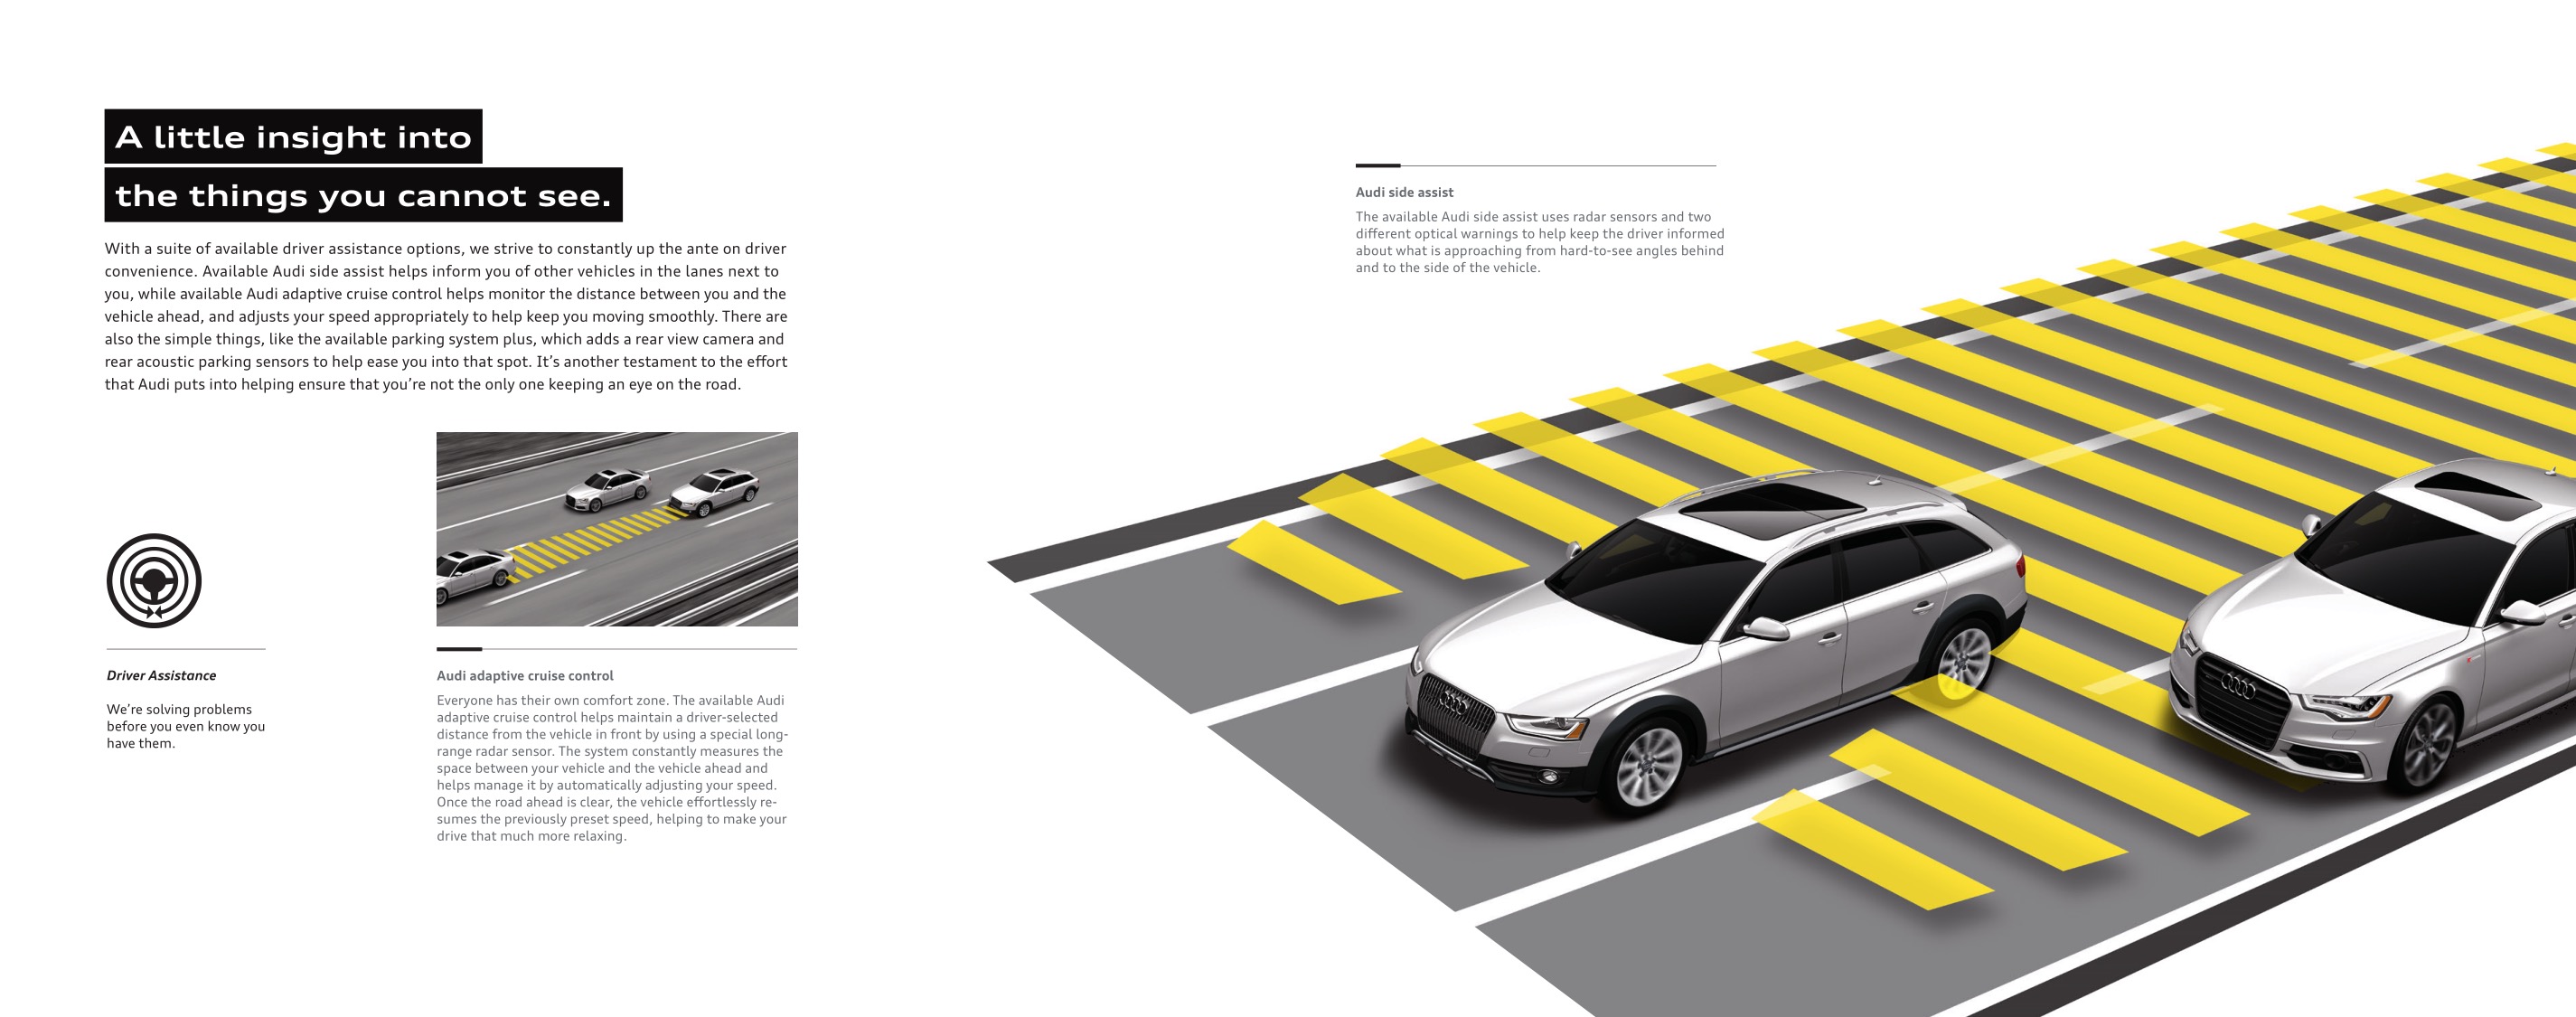 2015 Audi Allroad Brochure Page 11